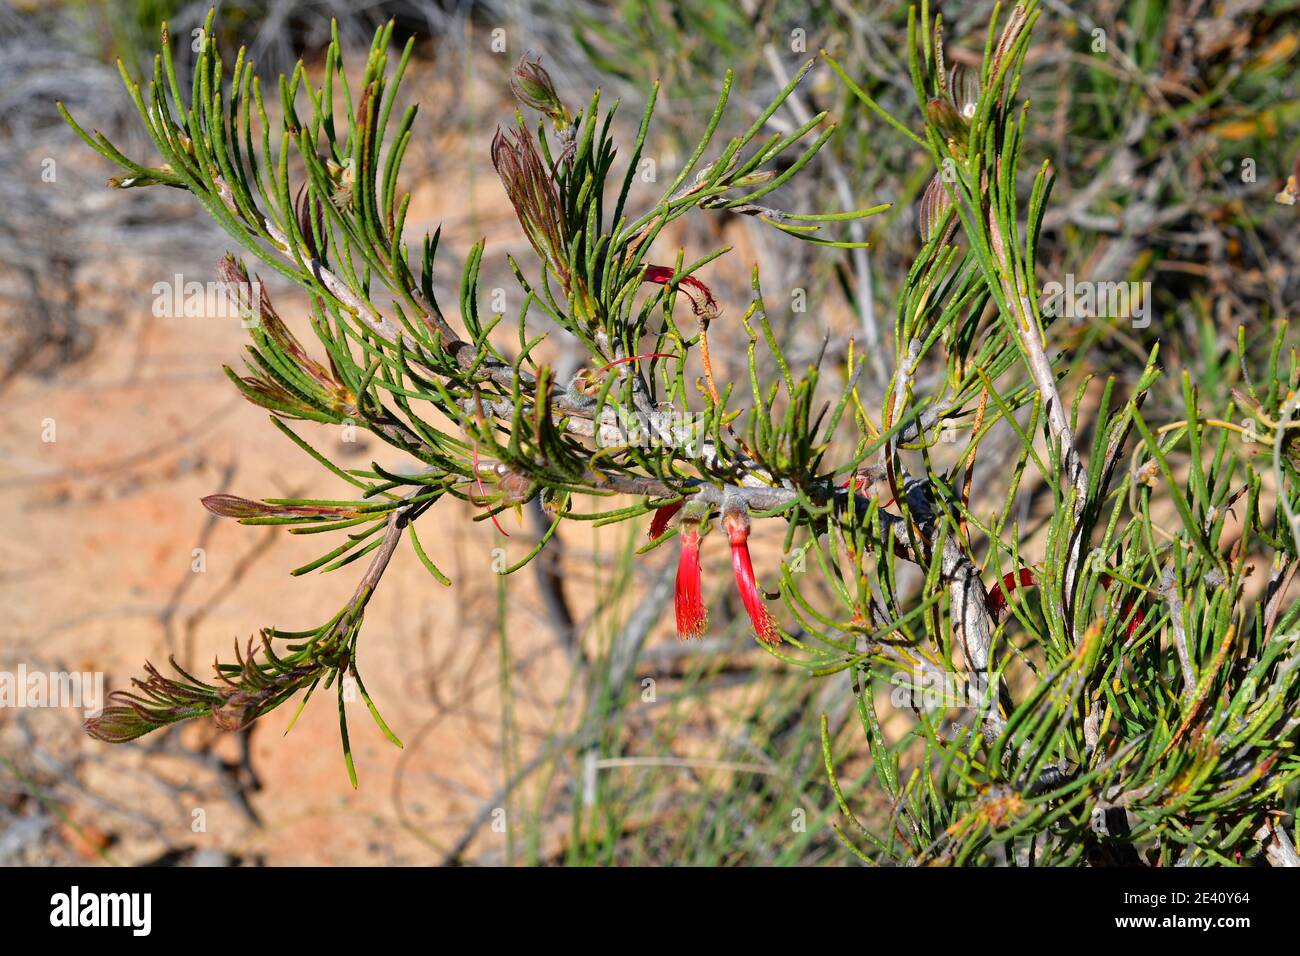 Australia, she-oak mistletoe Stock Photo